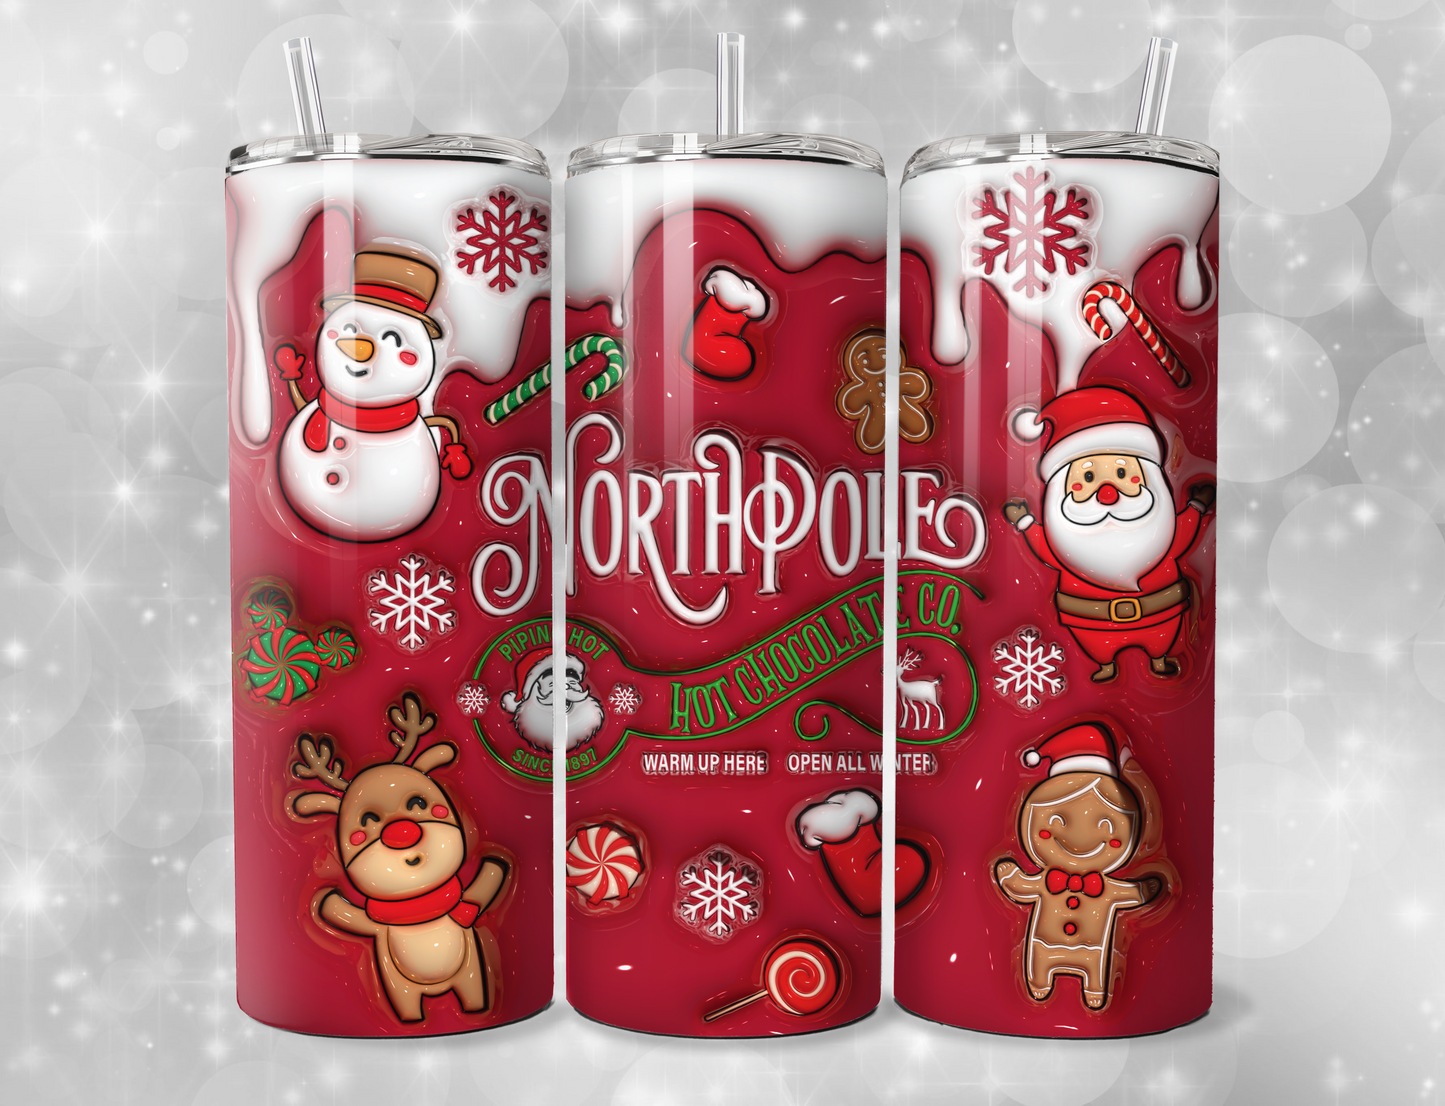 North Pole Hot Chocolate Company - Version 2